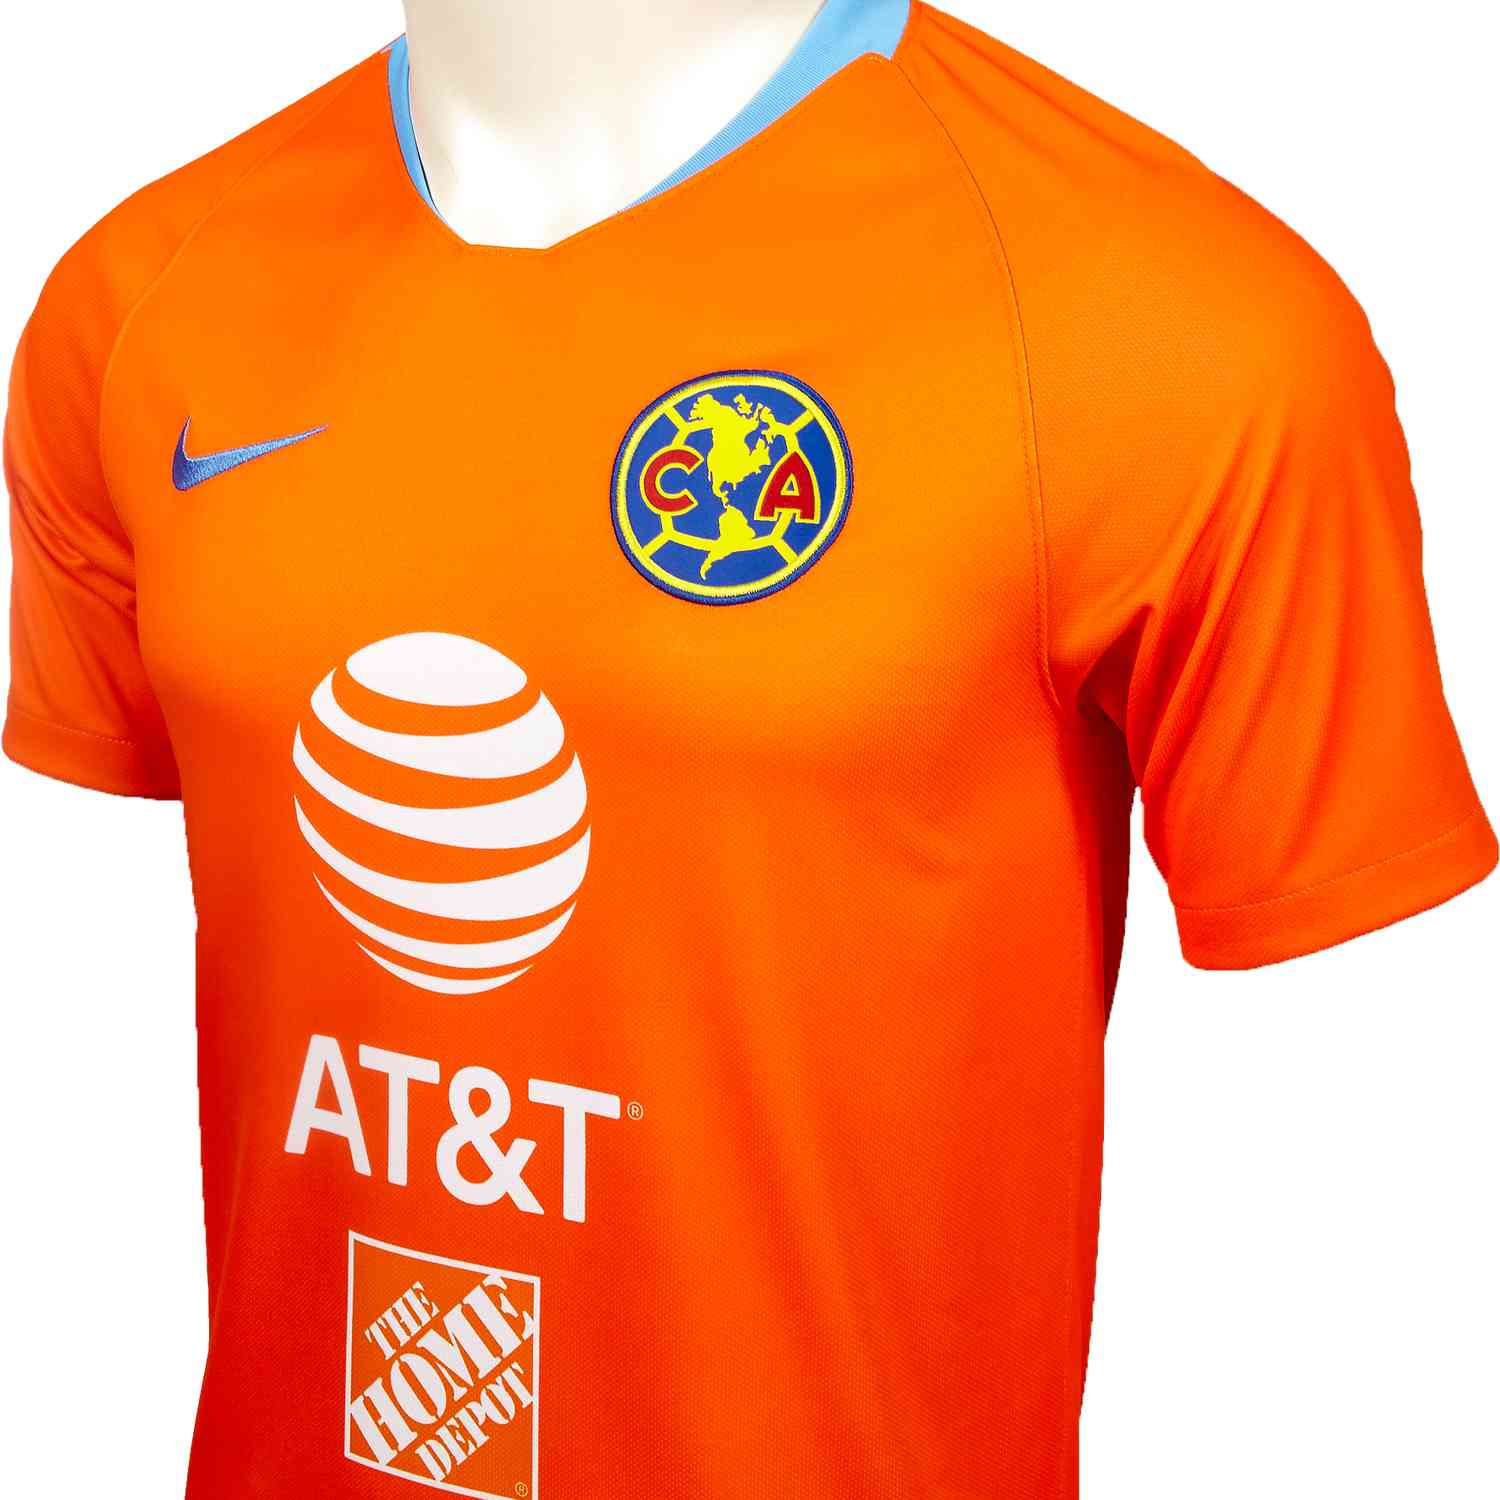 club america 2018 jersey